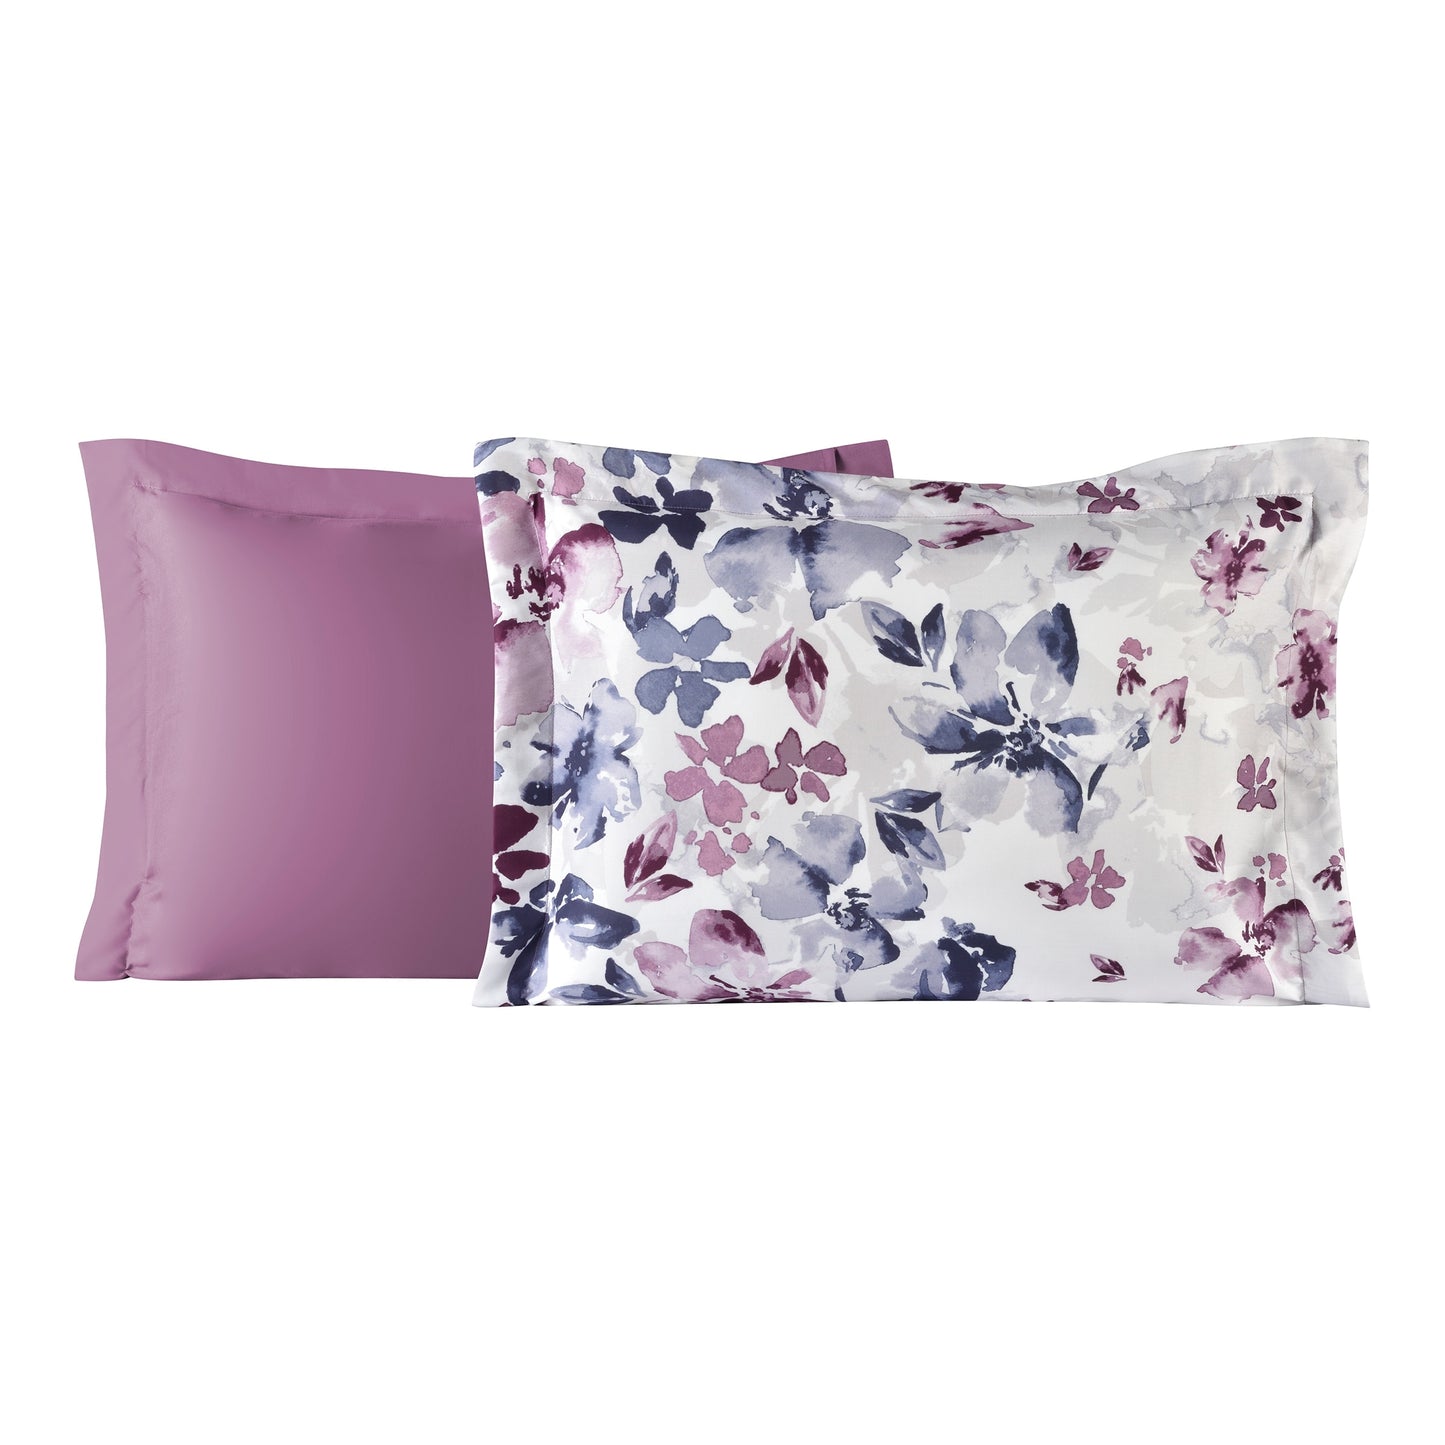 Lanwood Home Monica Reversible 8-Piece Bed-In-A-Bag Comforter Set